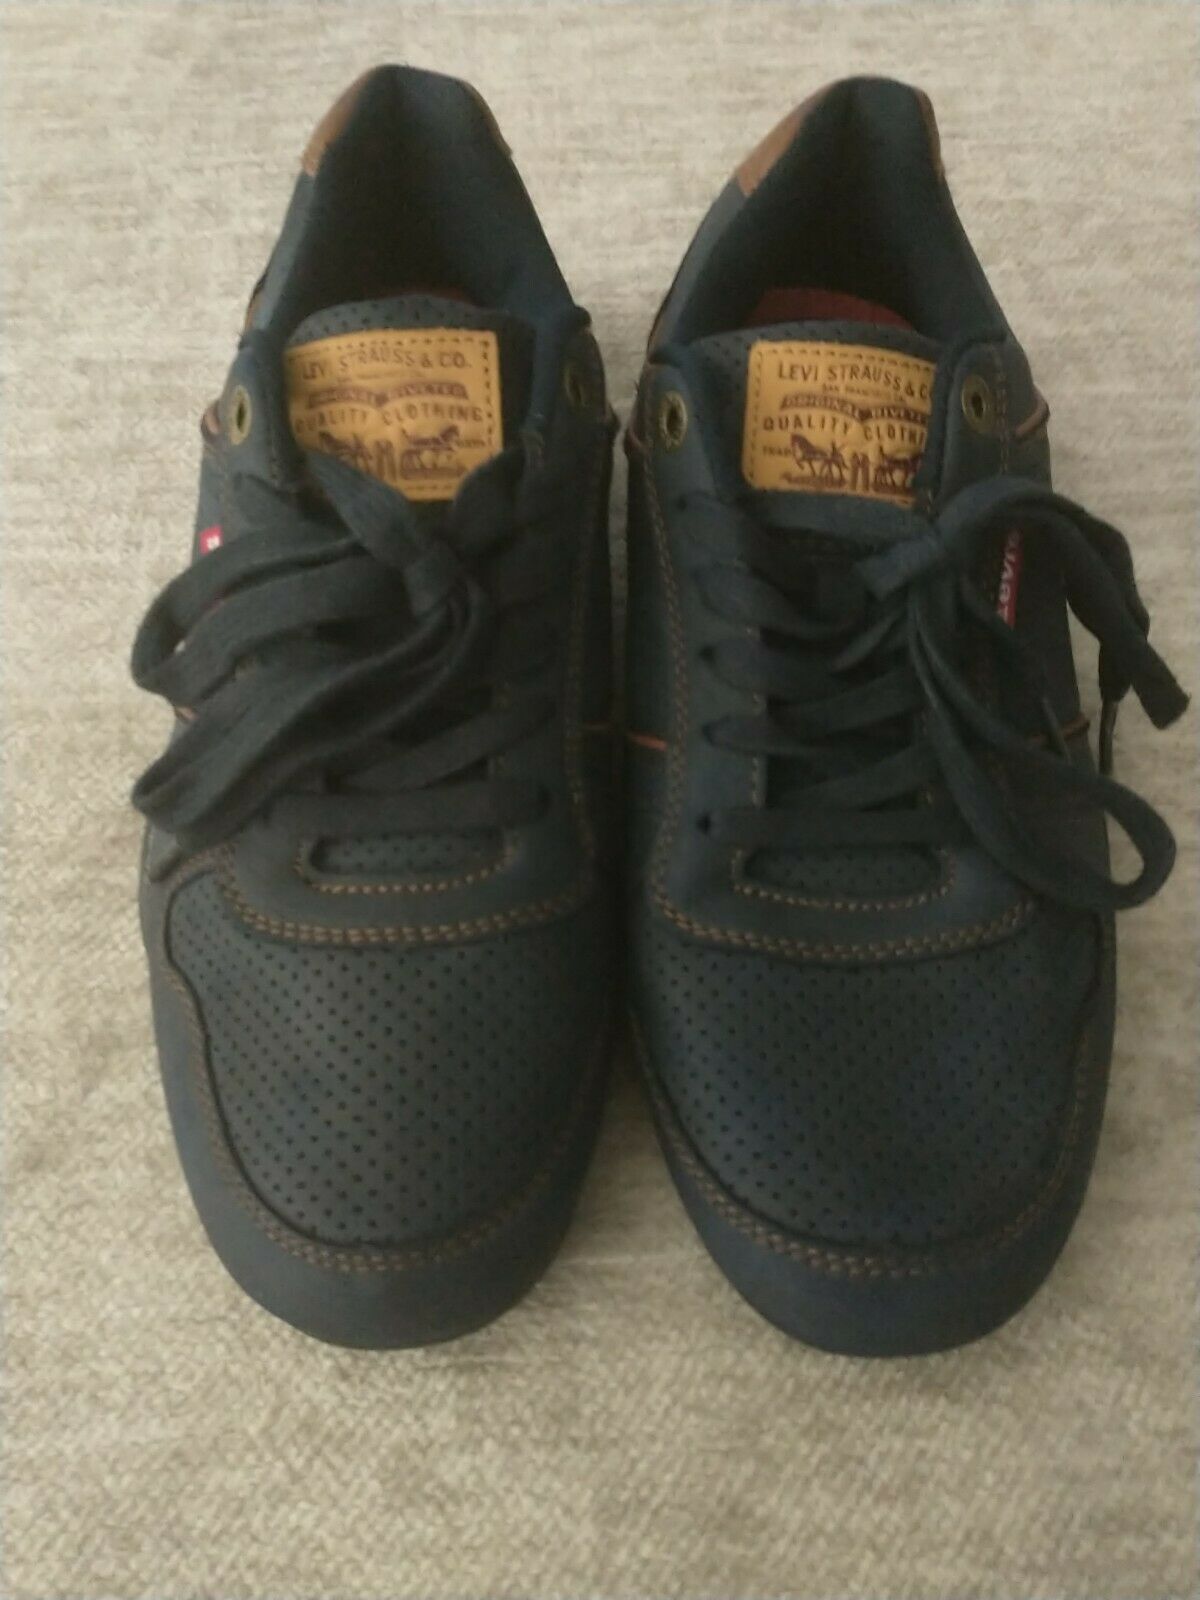 Levis dressy Tennis Shoes Mens Size 9 style # 51888772U Navy blue brown preppy